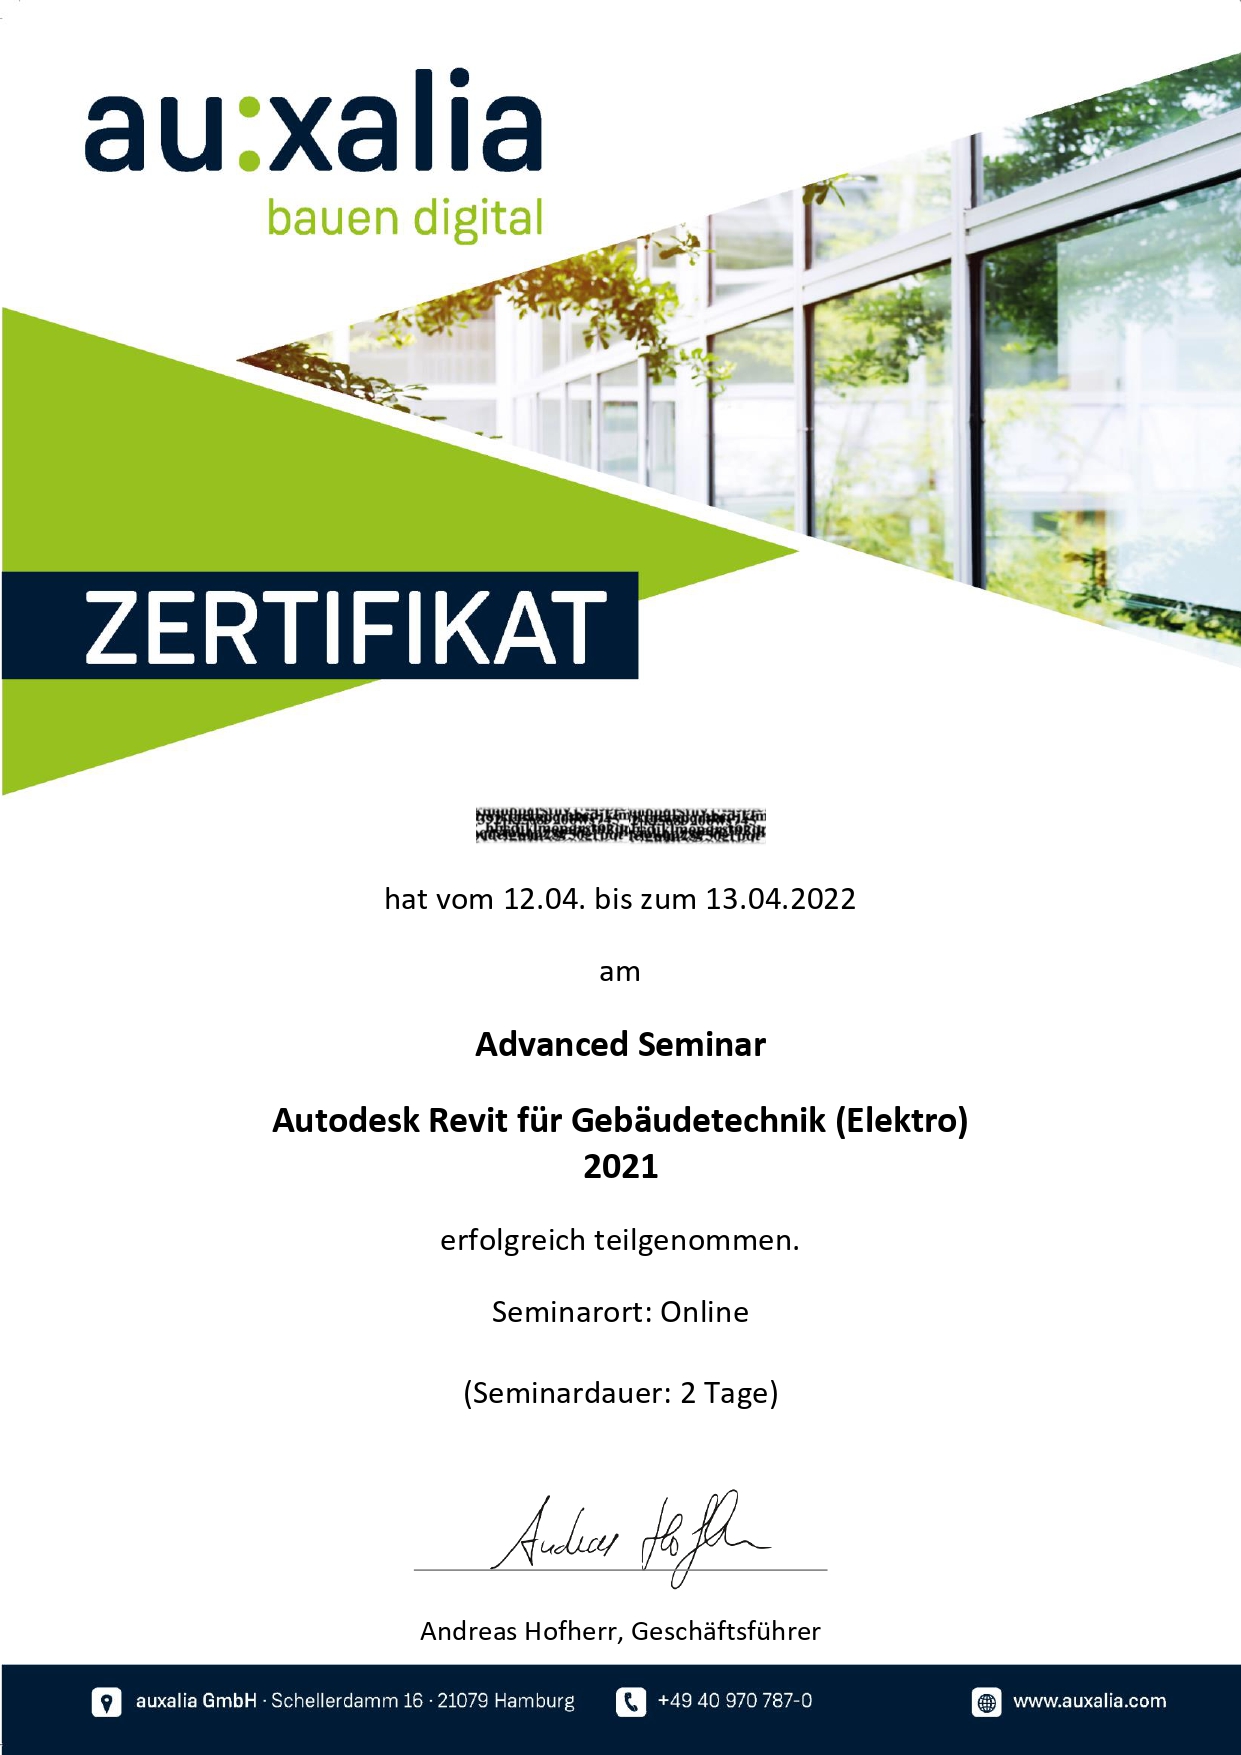 sineplan - Zertifikat Auxalia 2022 Autodesk Revit fuer Gebaeudetechnik Advanced